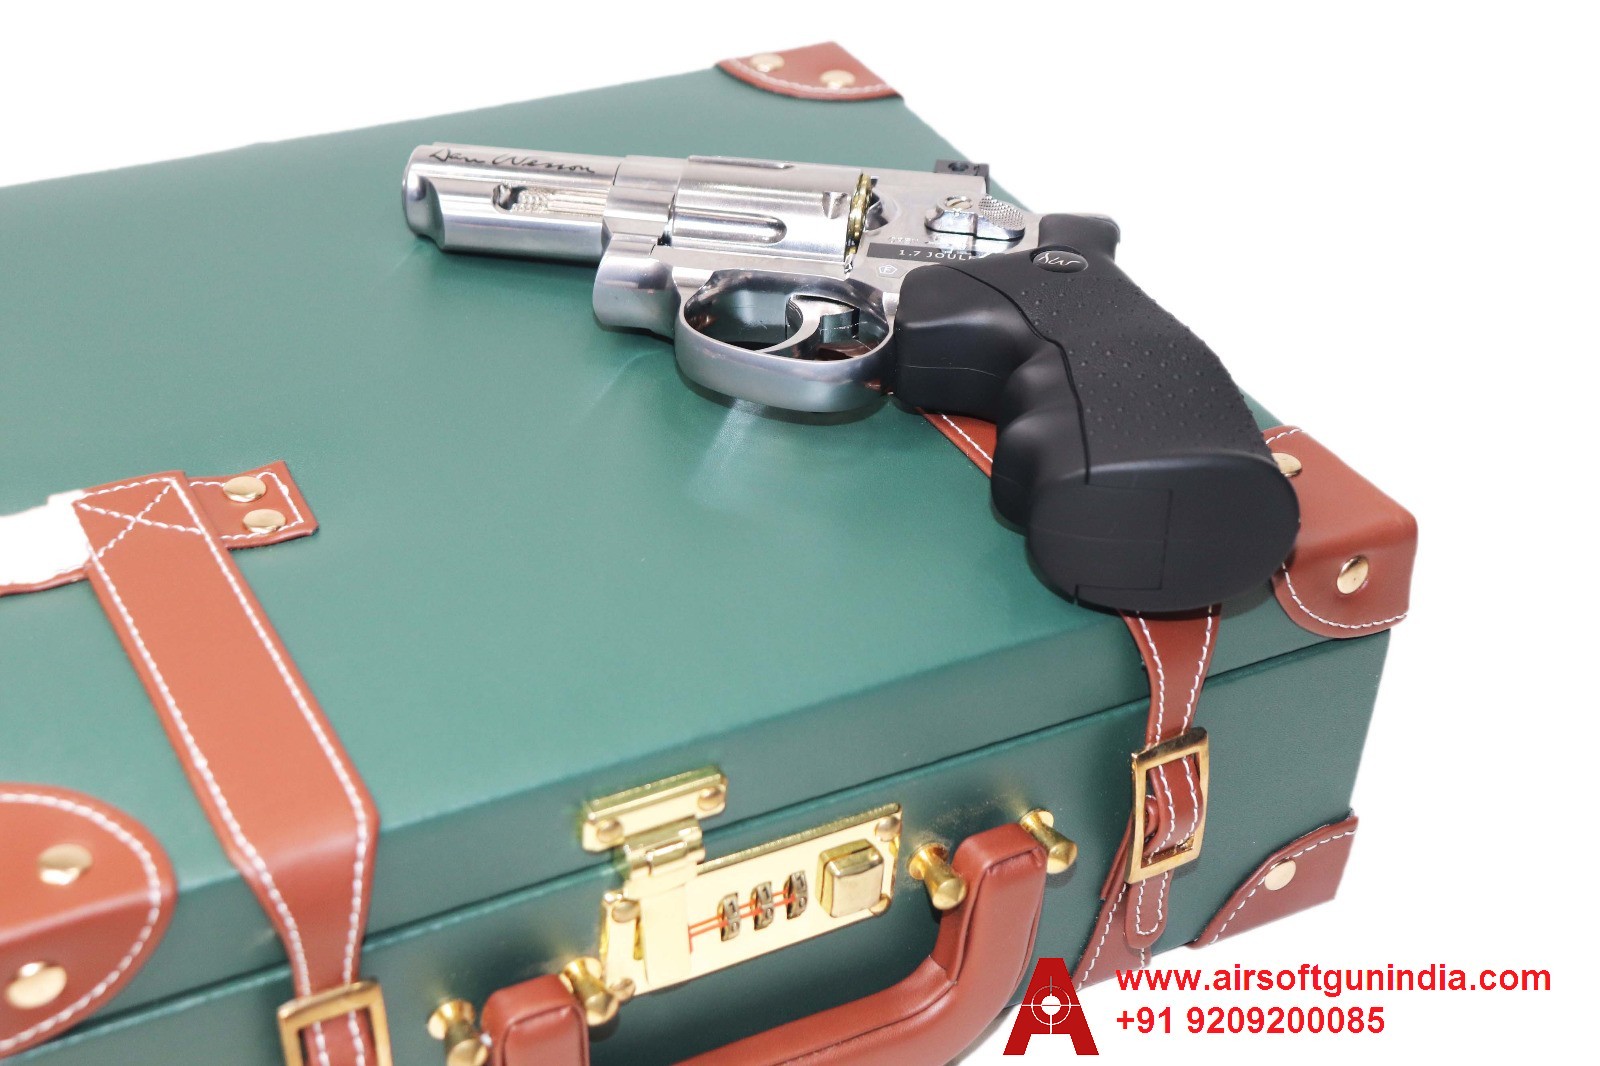 Vintage Retro Luxury Suitcase/Gun Box In Green Shade By Airsoft Gun India